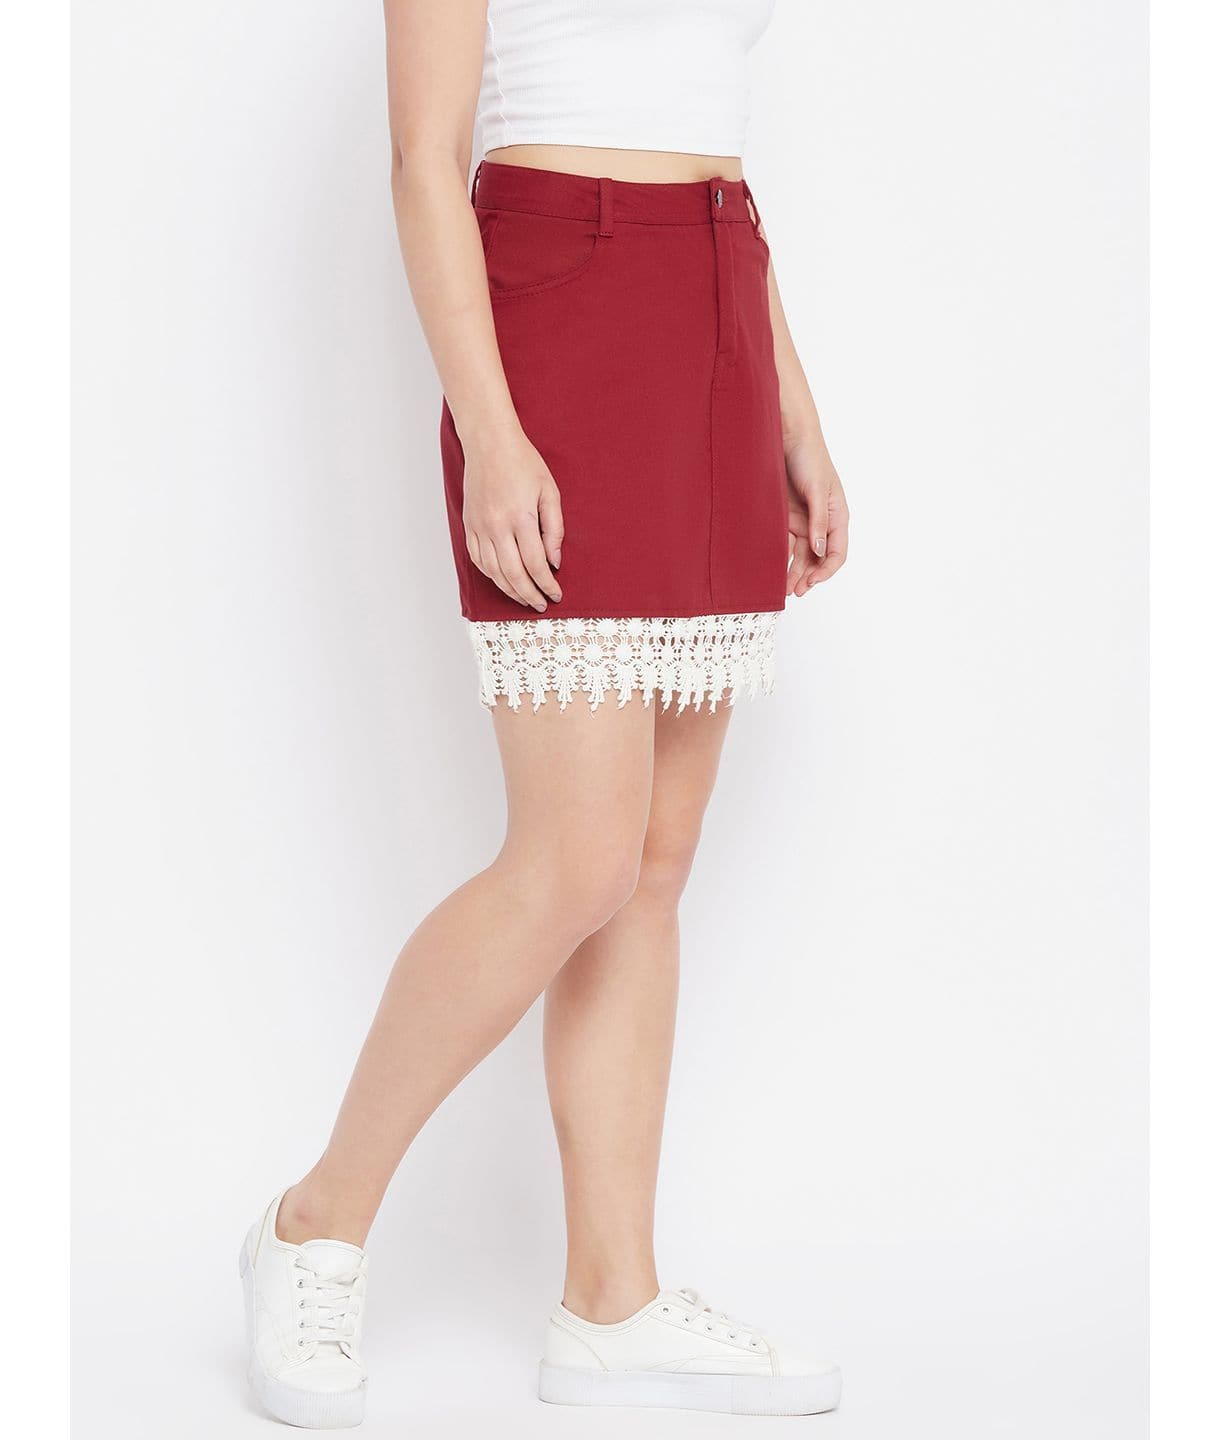 Stretchable Knee length Lace Denim Skirt - Uptownie